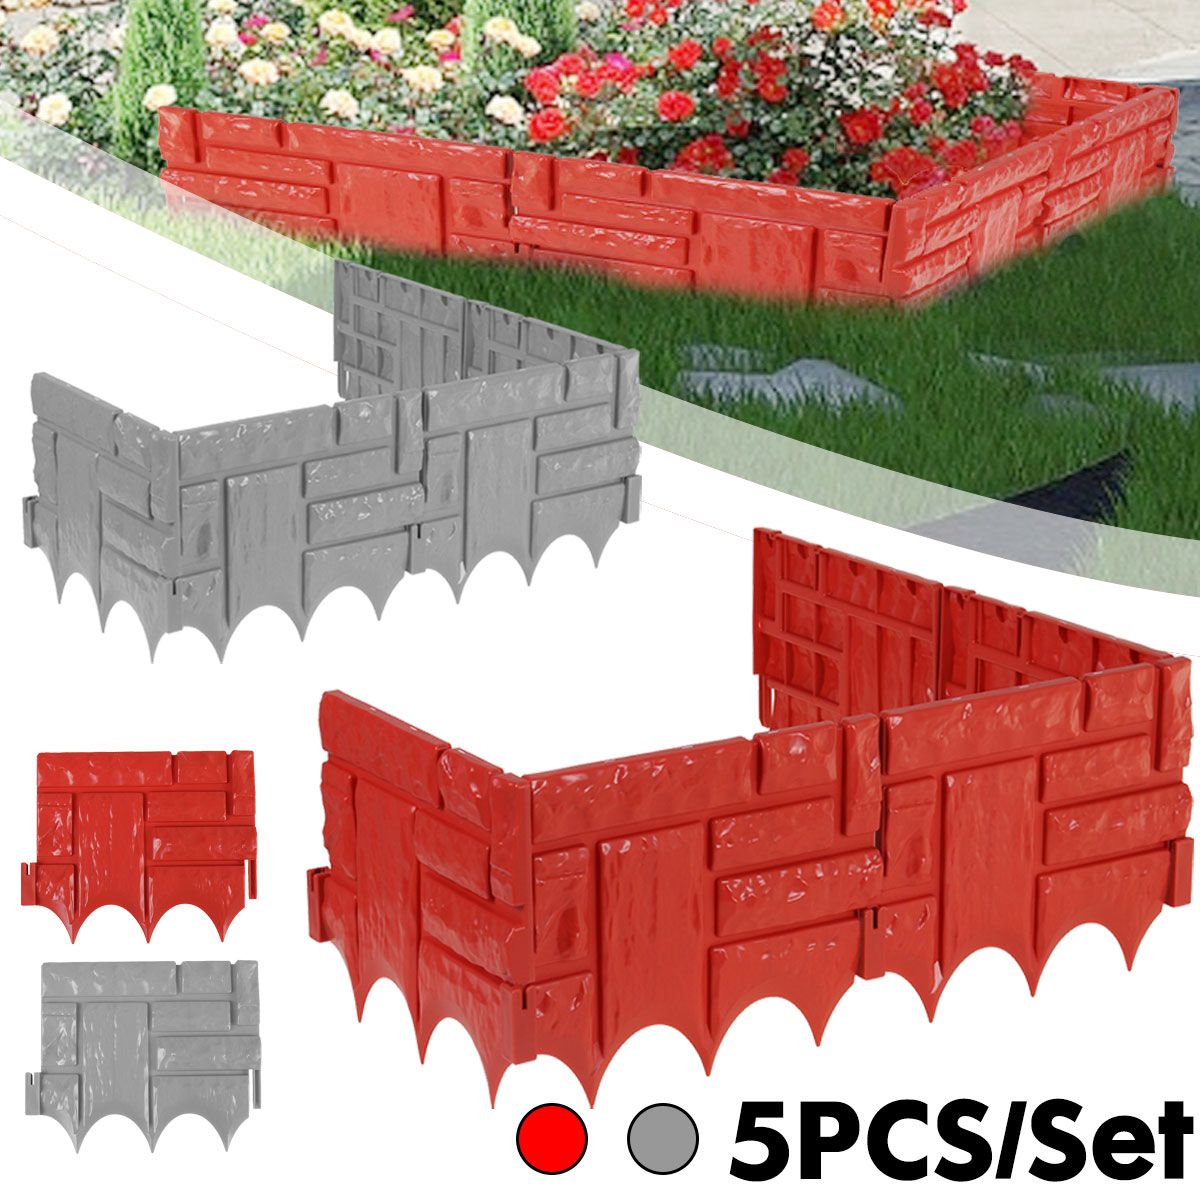 5PCS-Plastic-Garden-Fence-Panels-Garden-Fencing-Lawn-Edging-Plant-Border-Fence-1738338